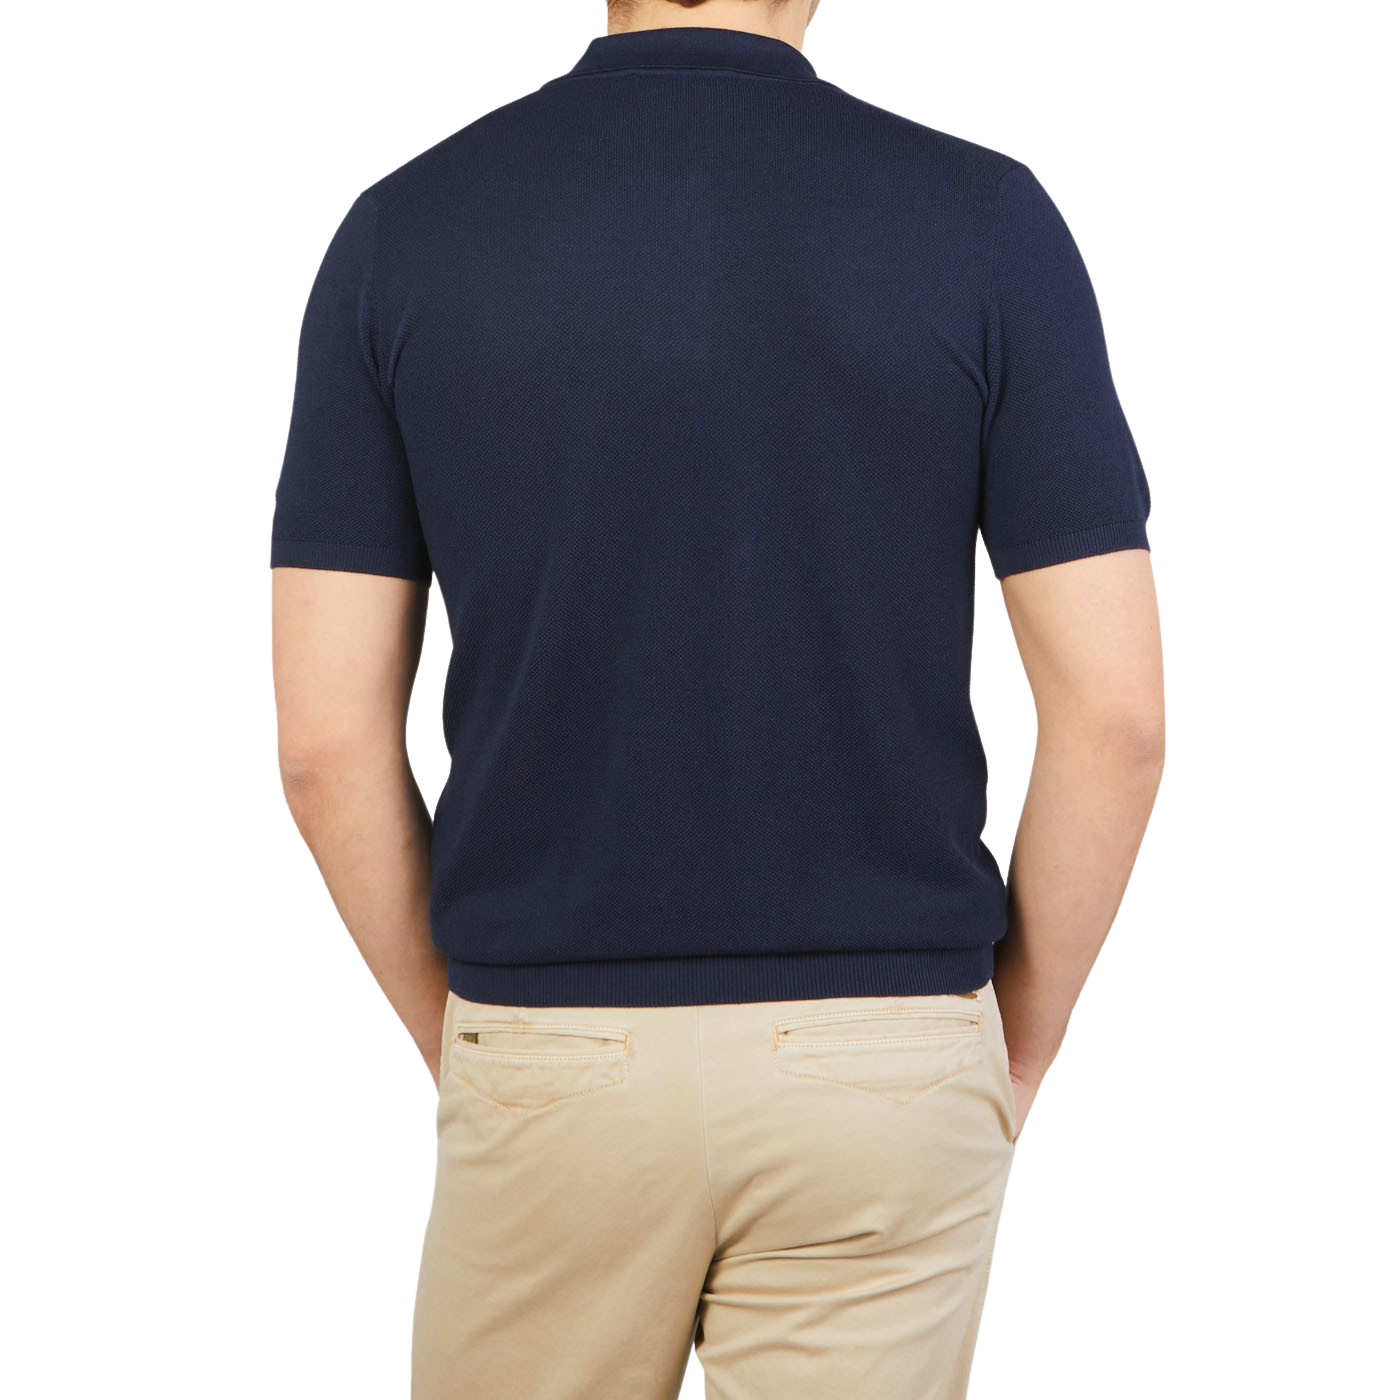 Mauro Ottaviani Navy Blue Cotton Silk Polo Shirt Back